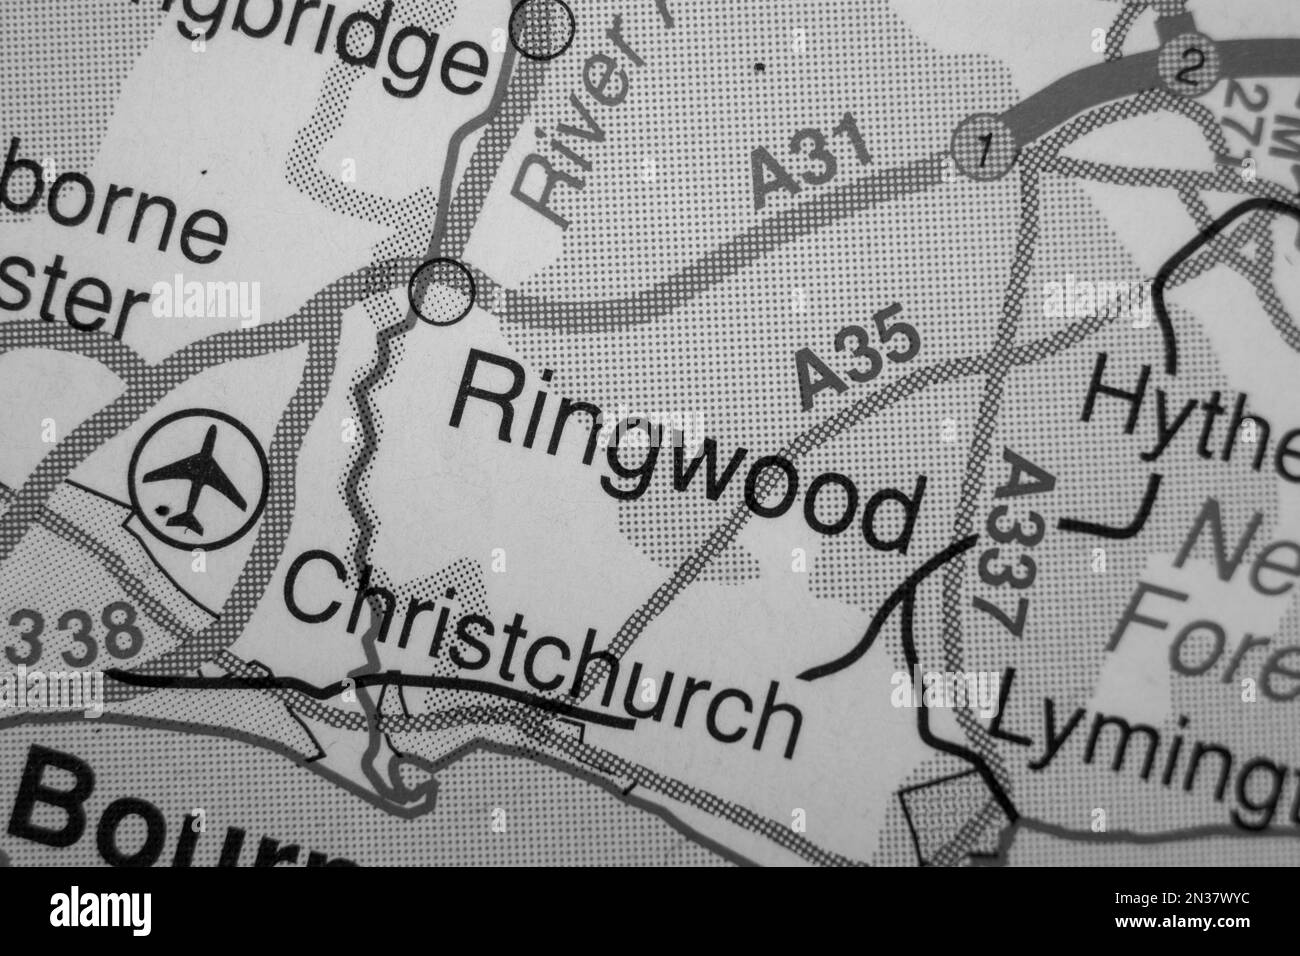 Ringwood, United Kingdom atlas map town name - black and white Stock Photo